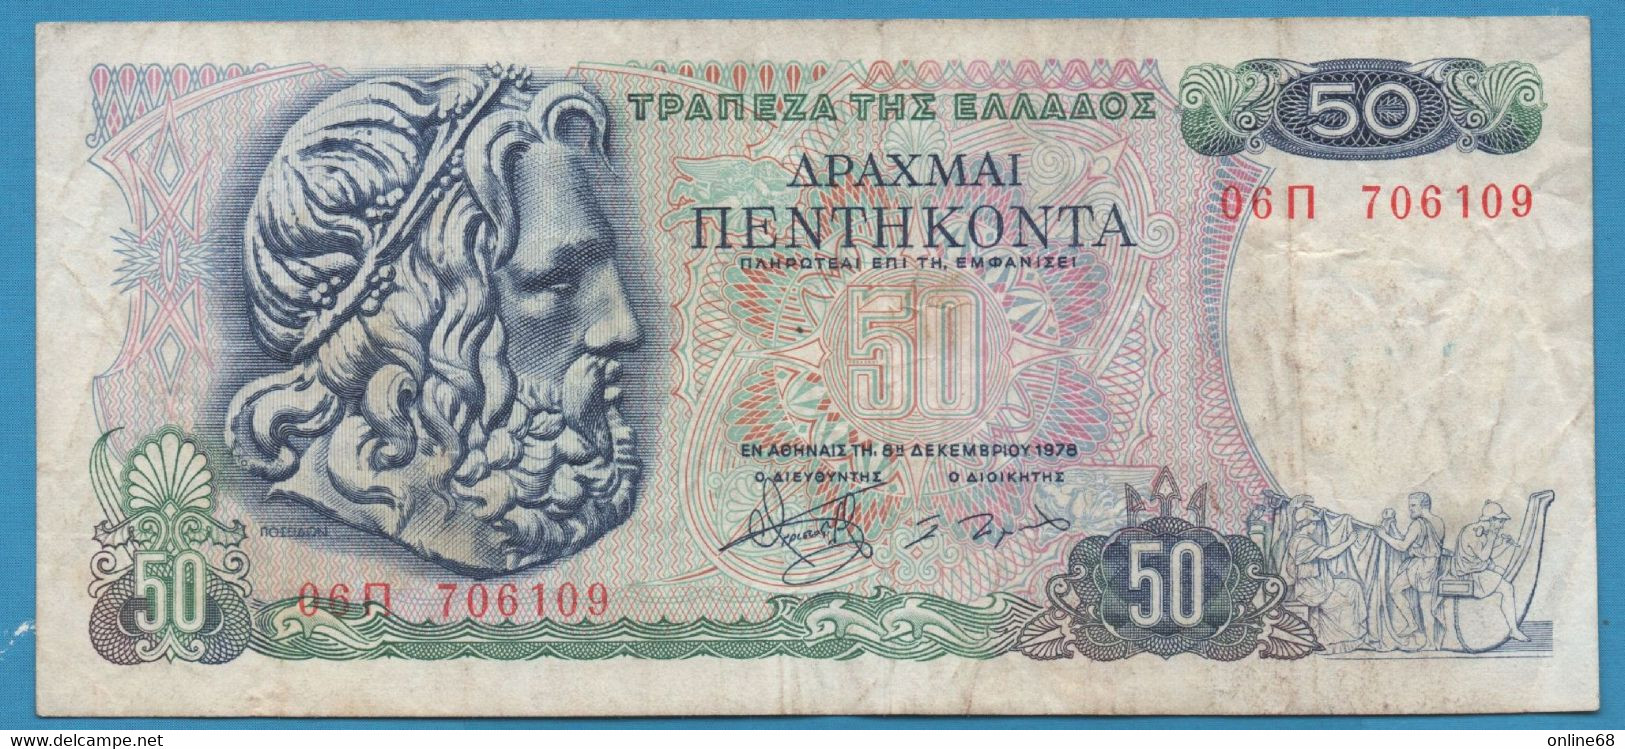 GREECE 50 DRACHMAI 08.12.1978 # 06Π 706109 F# 199 Poseidon - Grèce